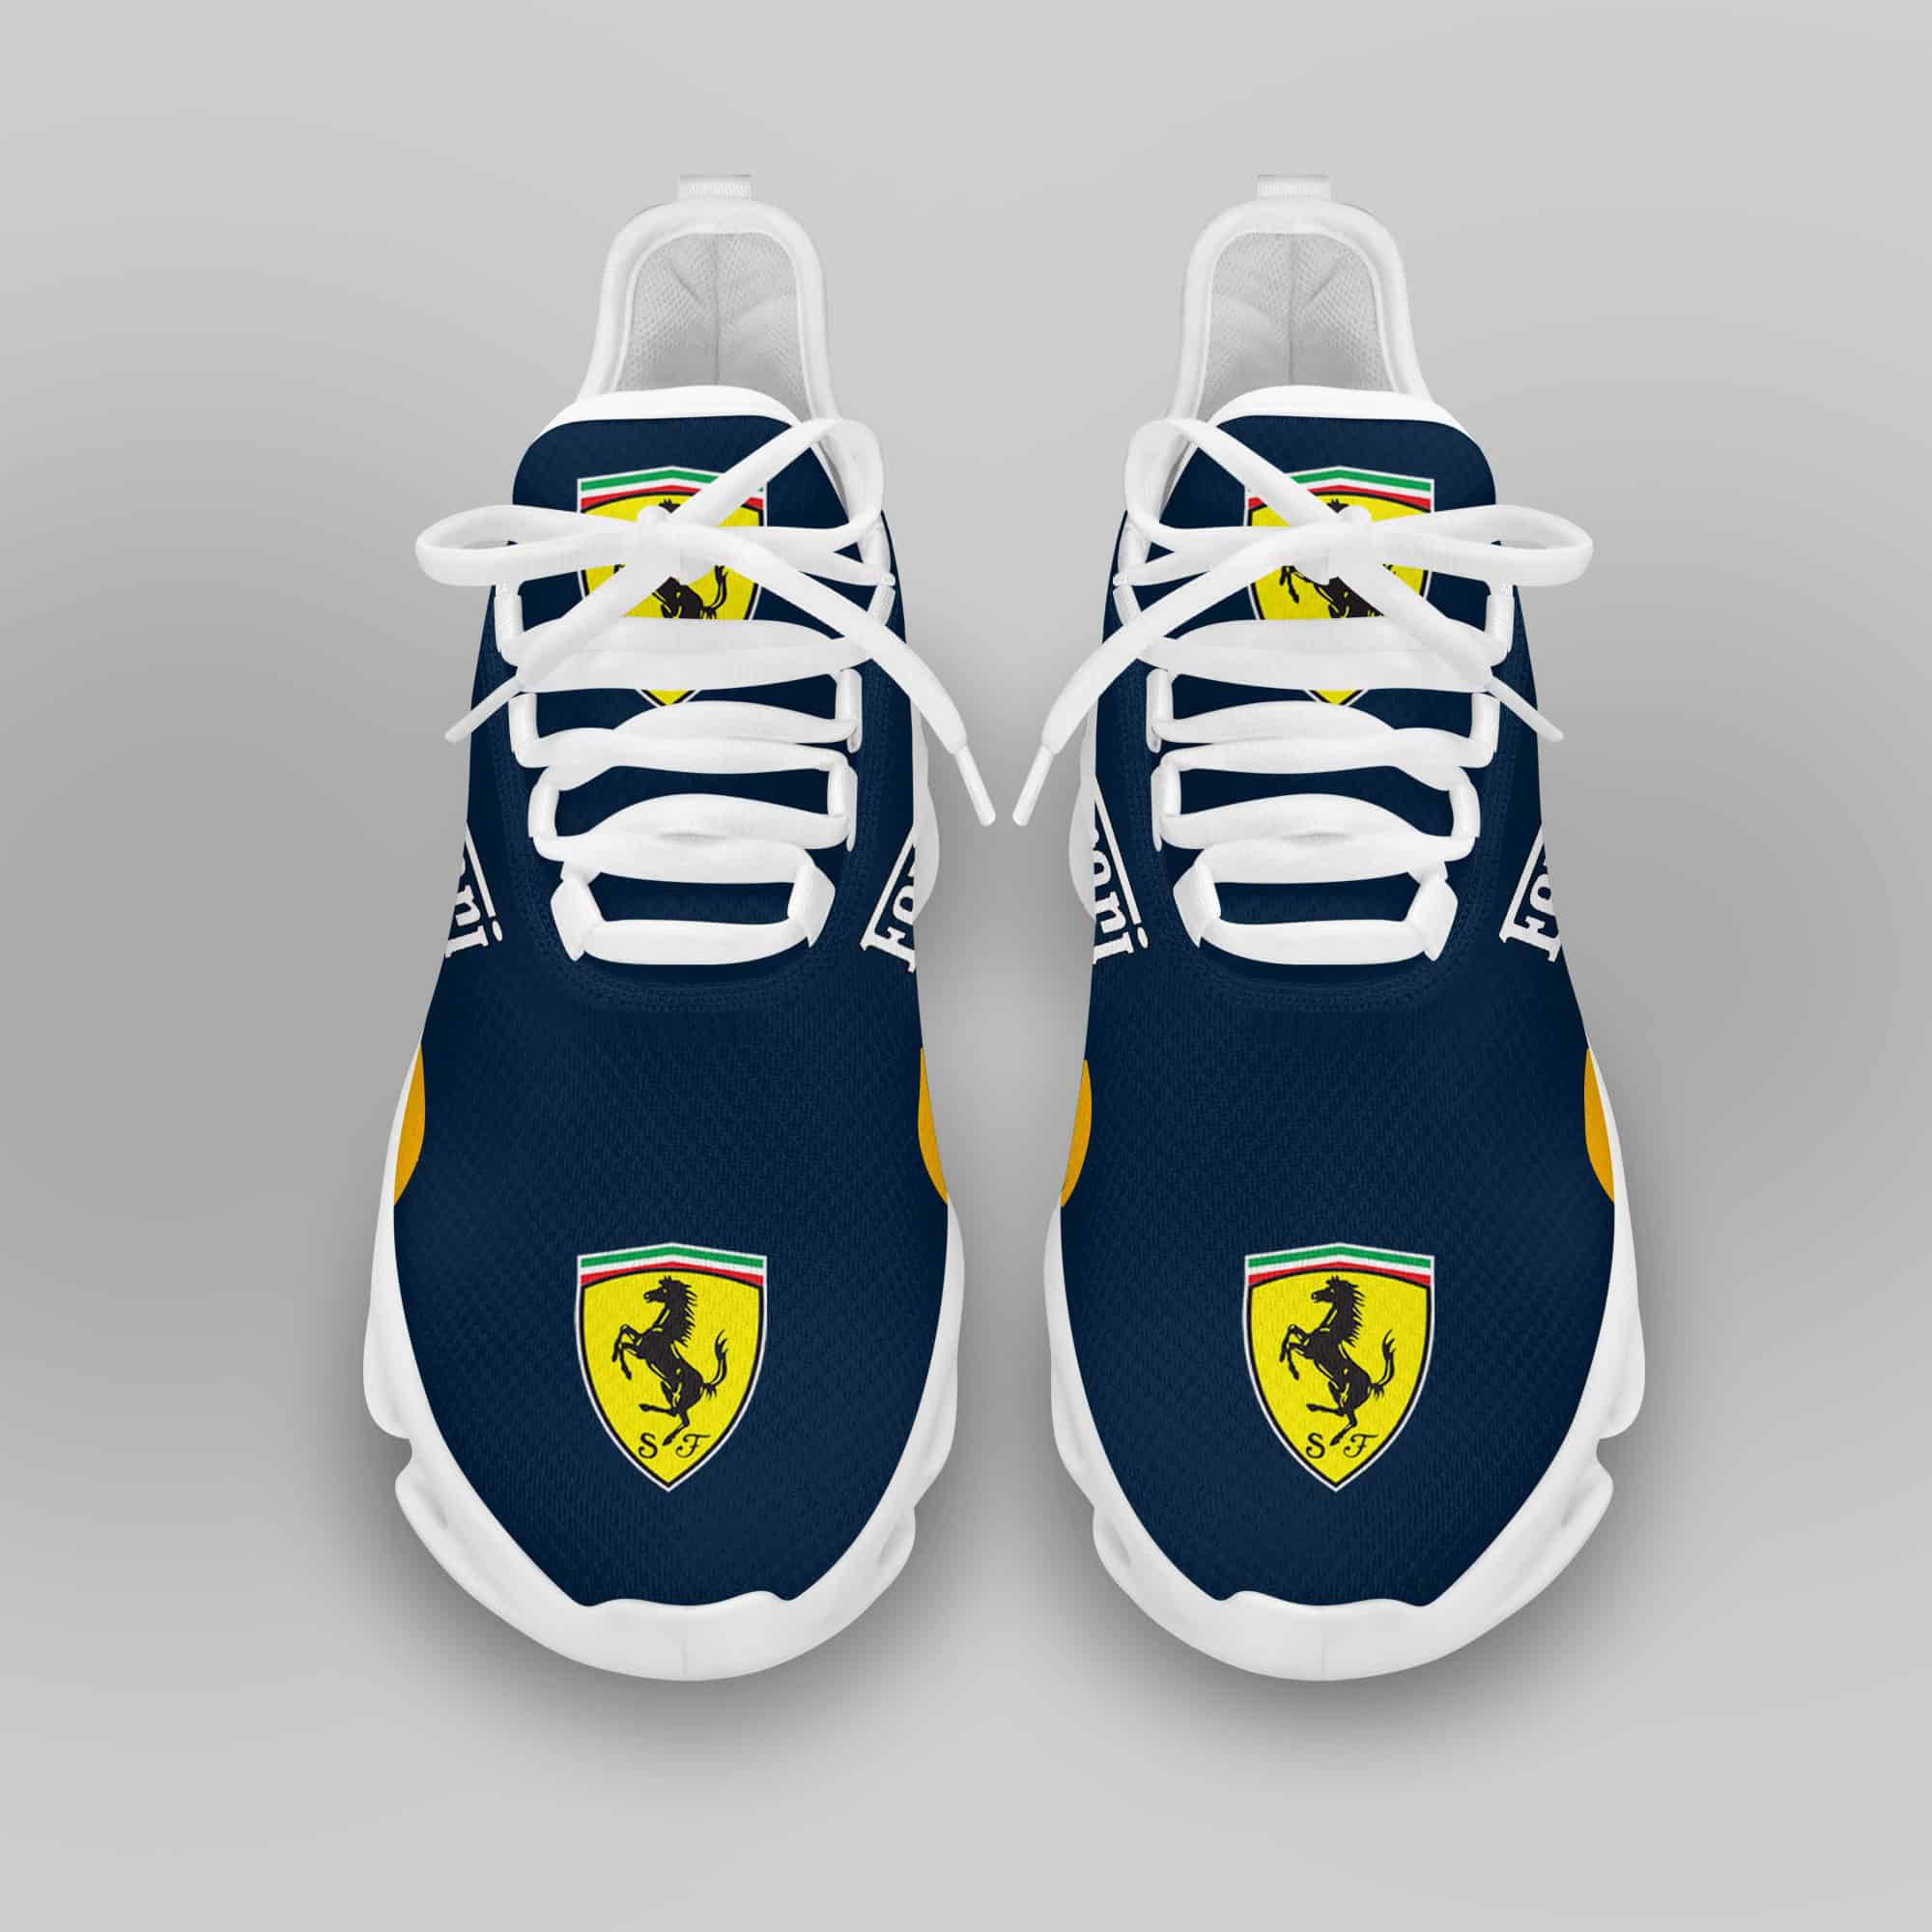 Ferrari Sneaker Running Shoes Max Soul Shoes Sneakers Ver 12 3